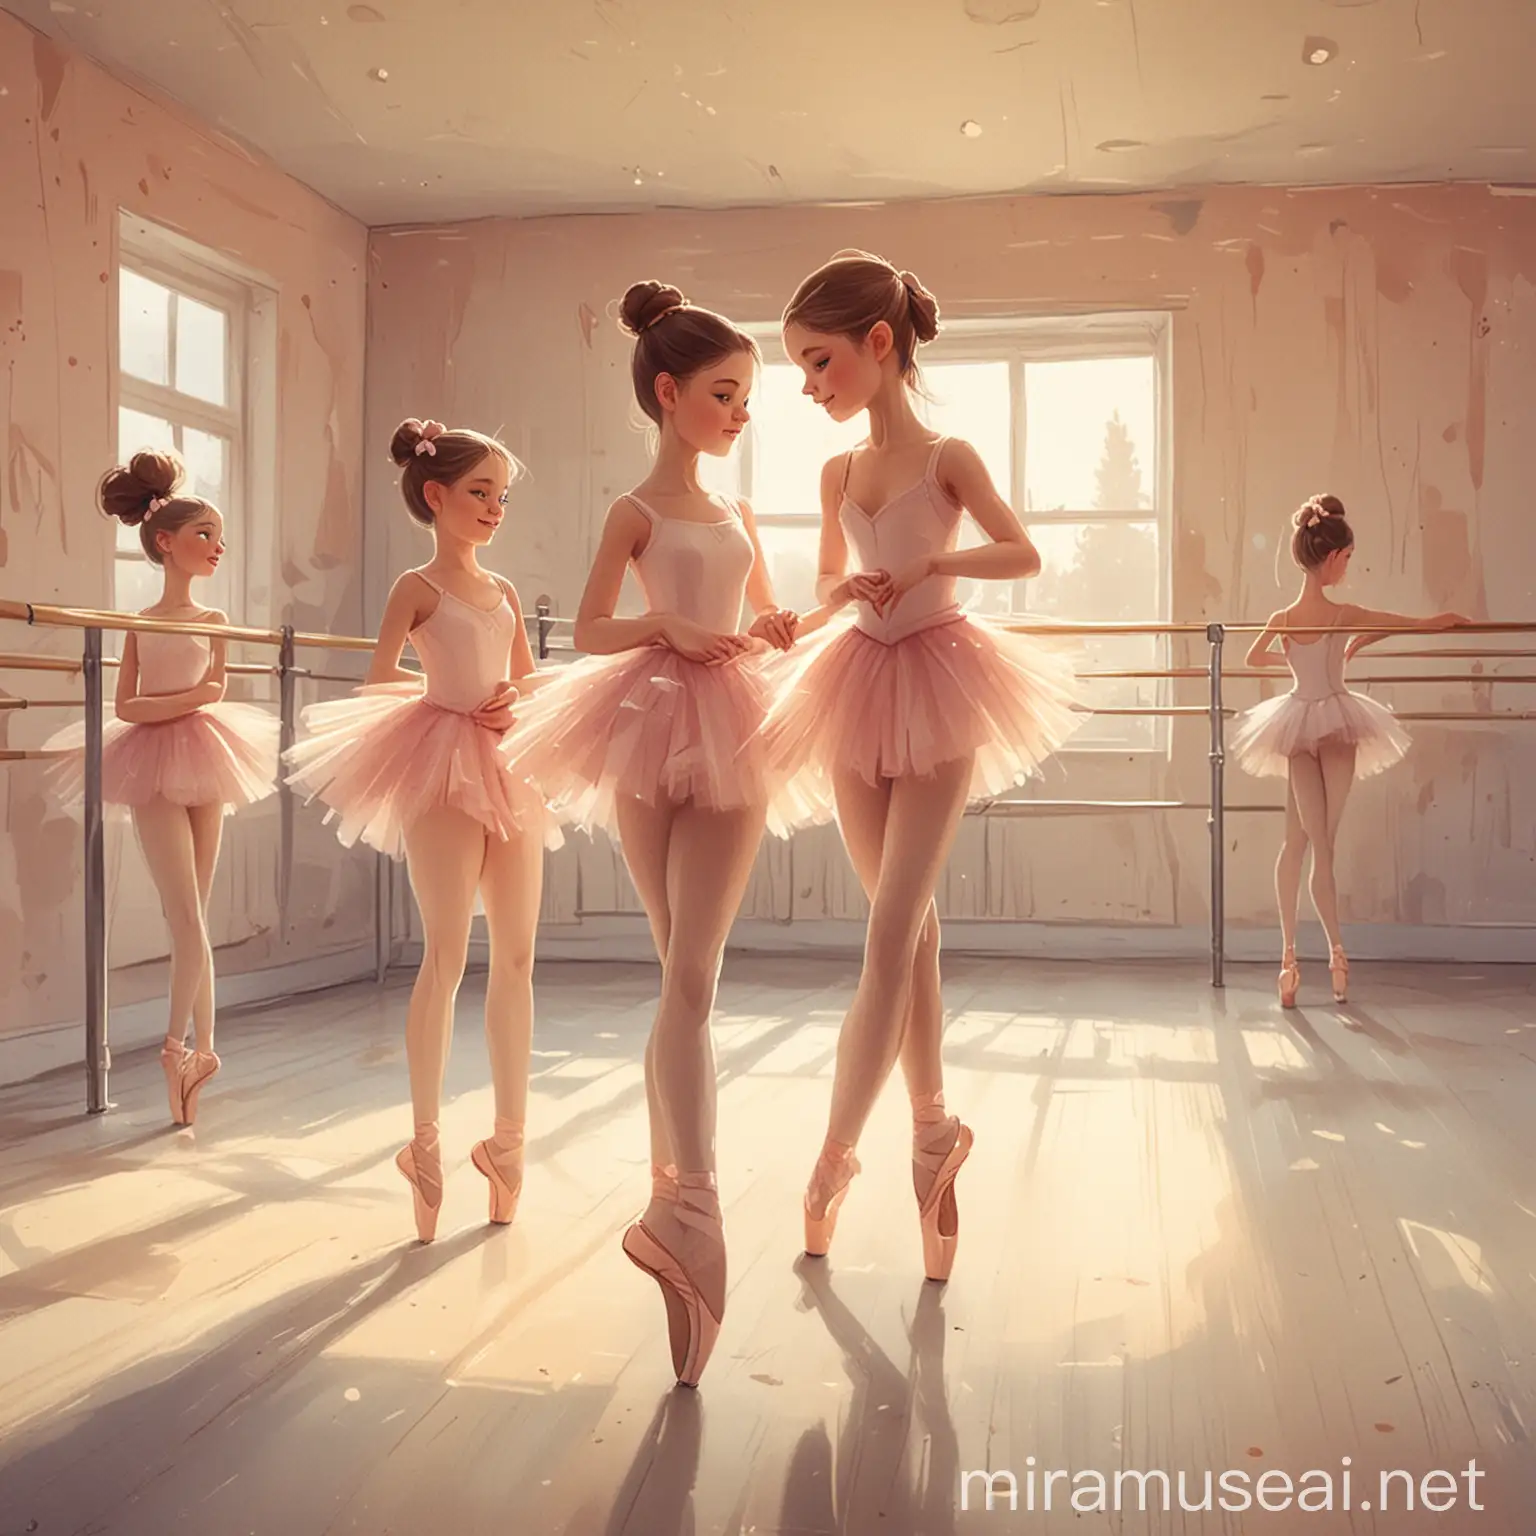 Cartoon Ballerinas Standing on Pointe in Dance Studio